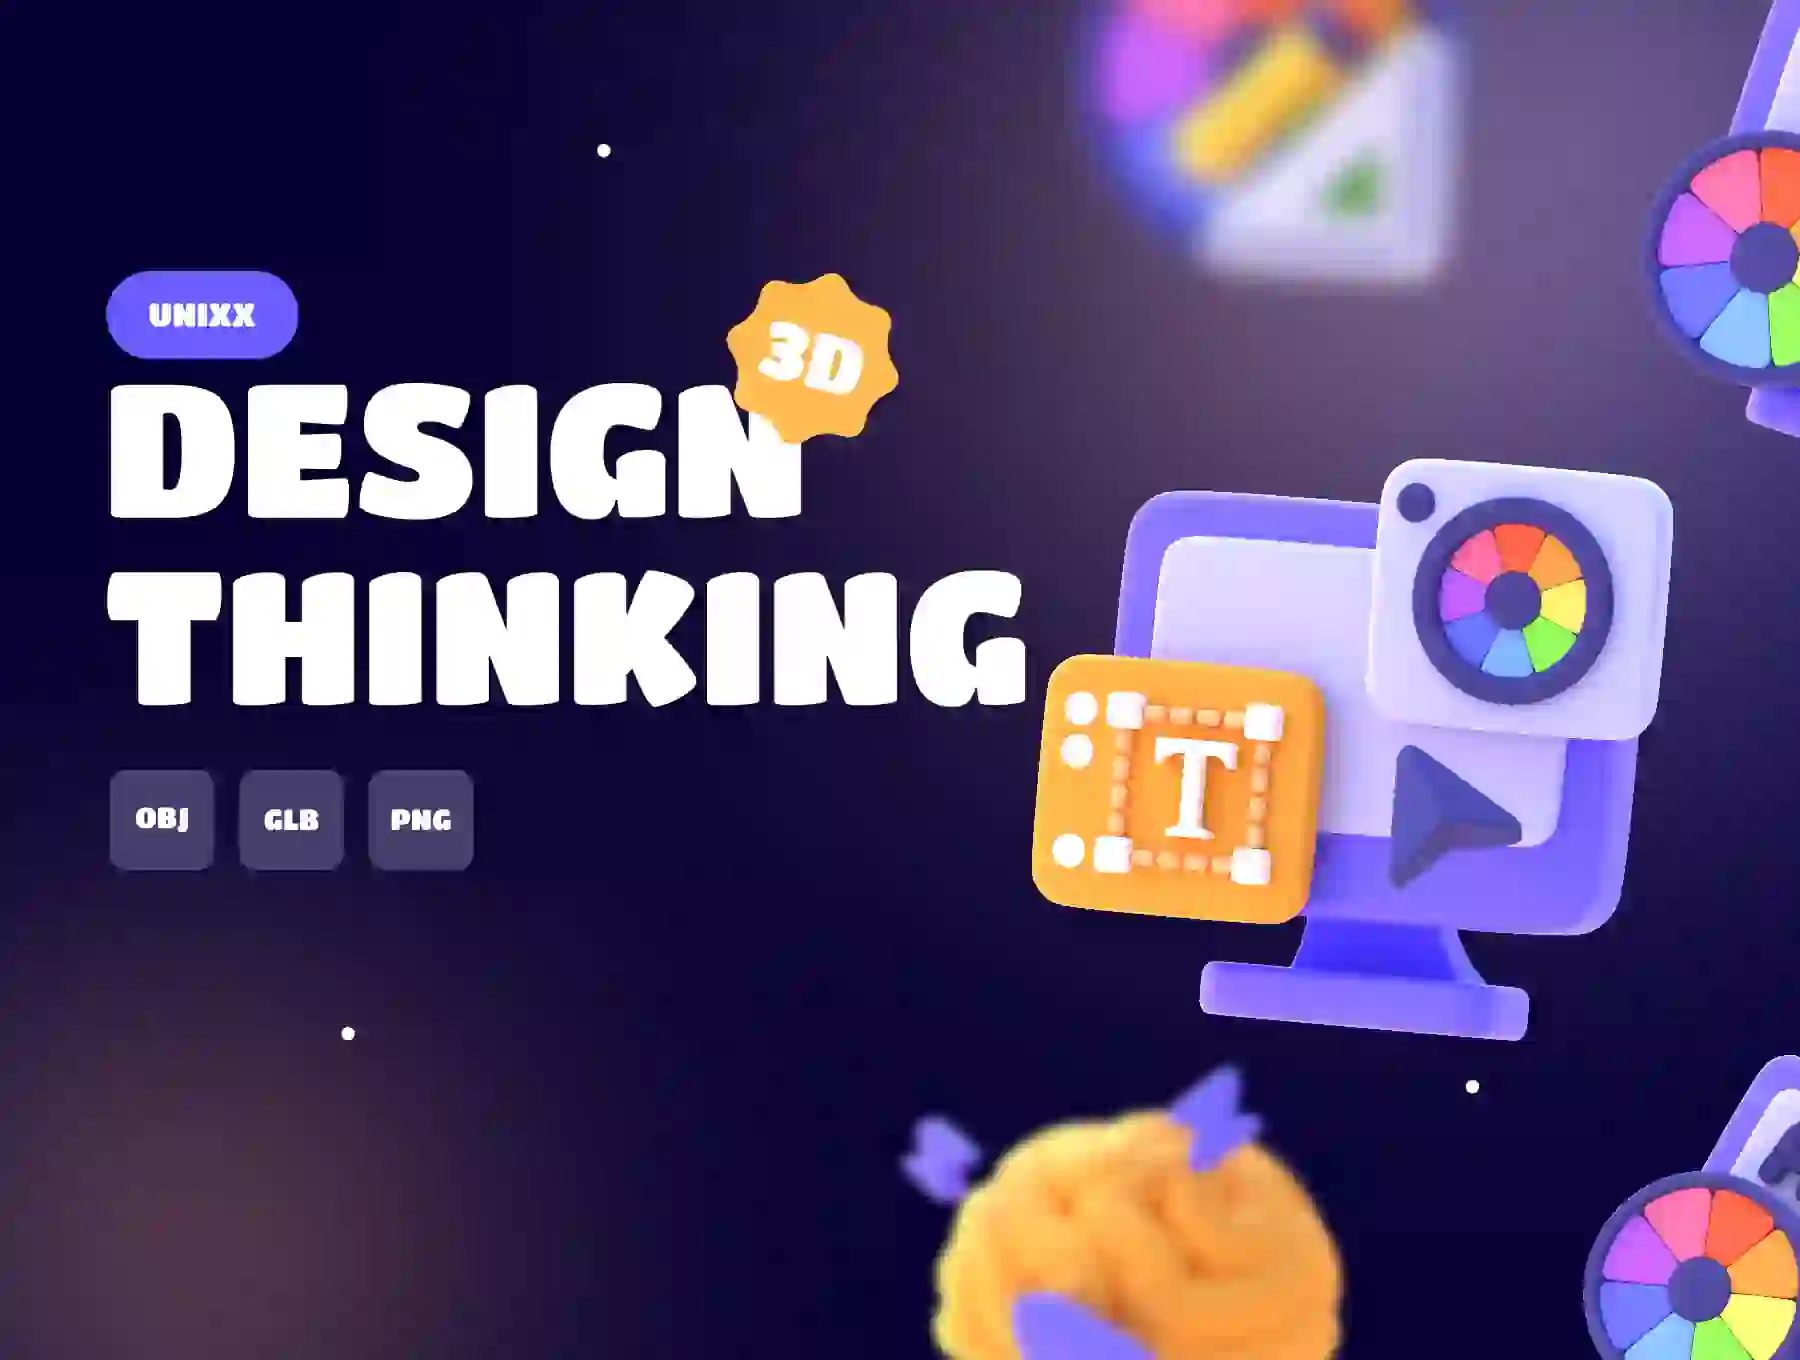 UNIXX - Design Thinking Element 3D